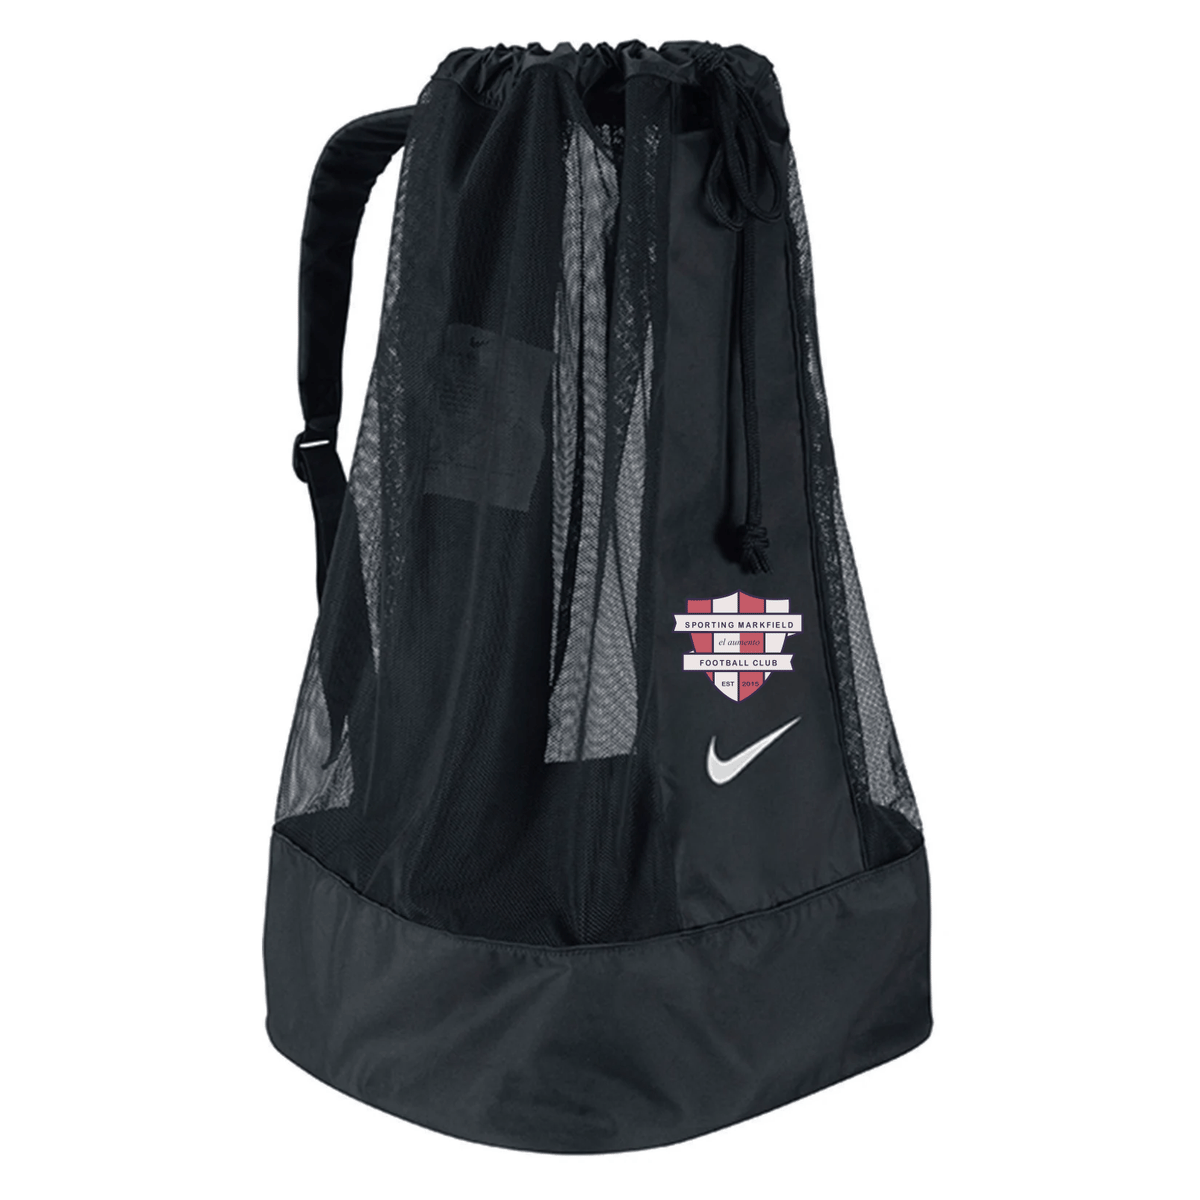 Sporting Markfield Nike Club Ball Bag